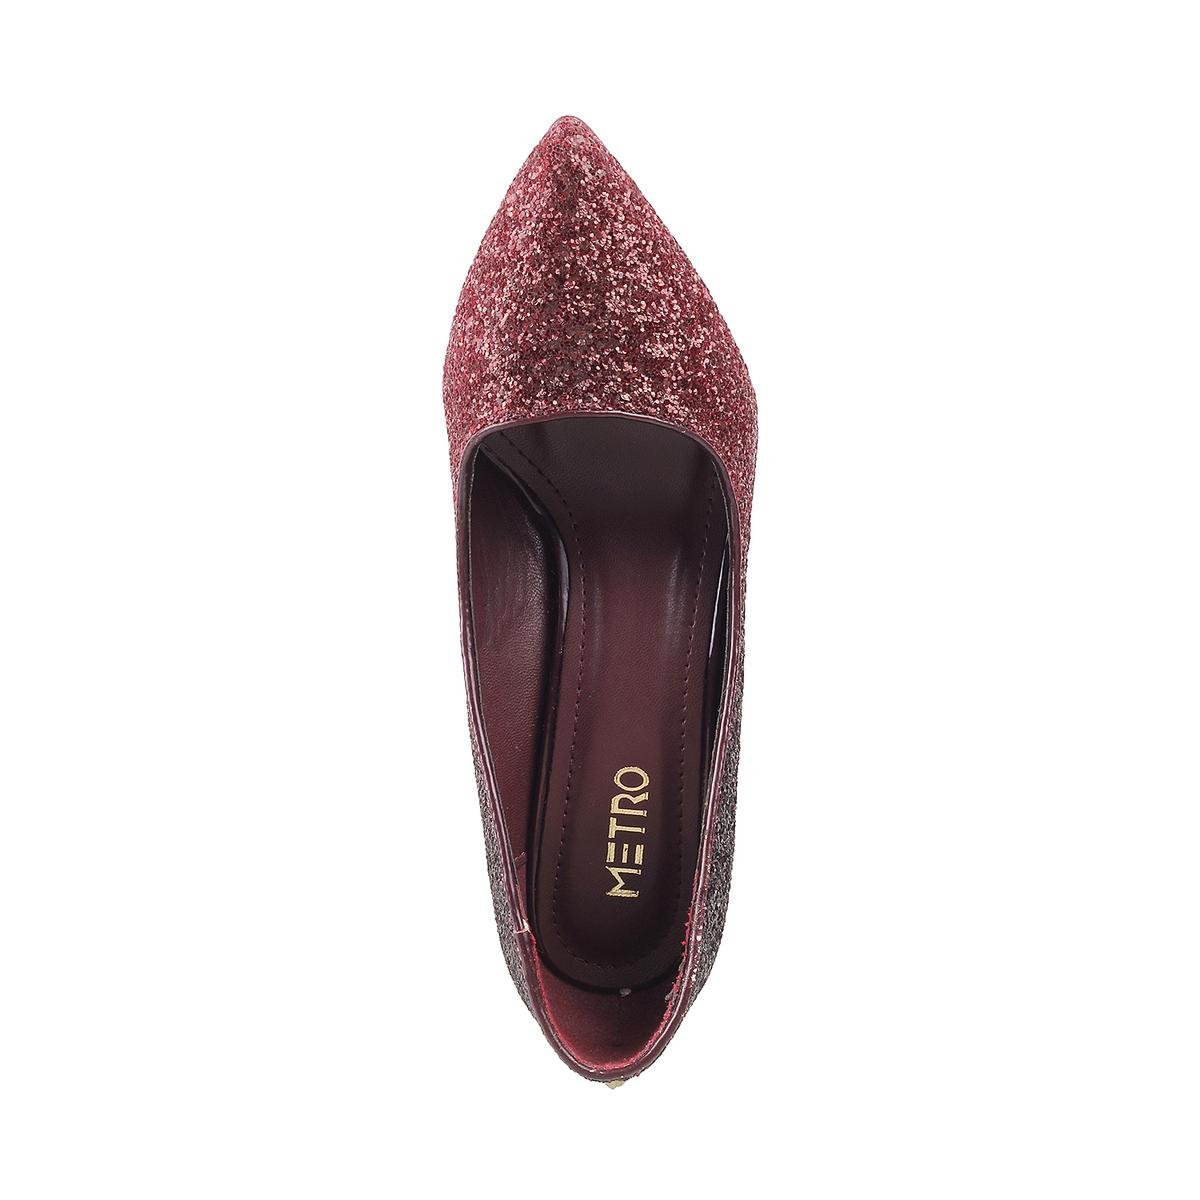 Wizard of oz Dorothy heels size 10 red sparkle... - Depop